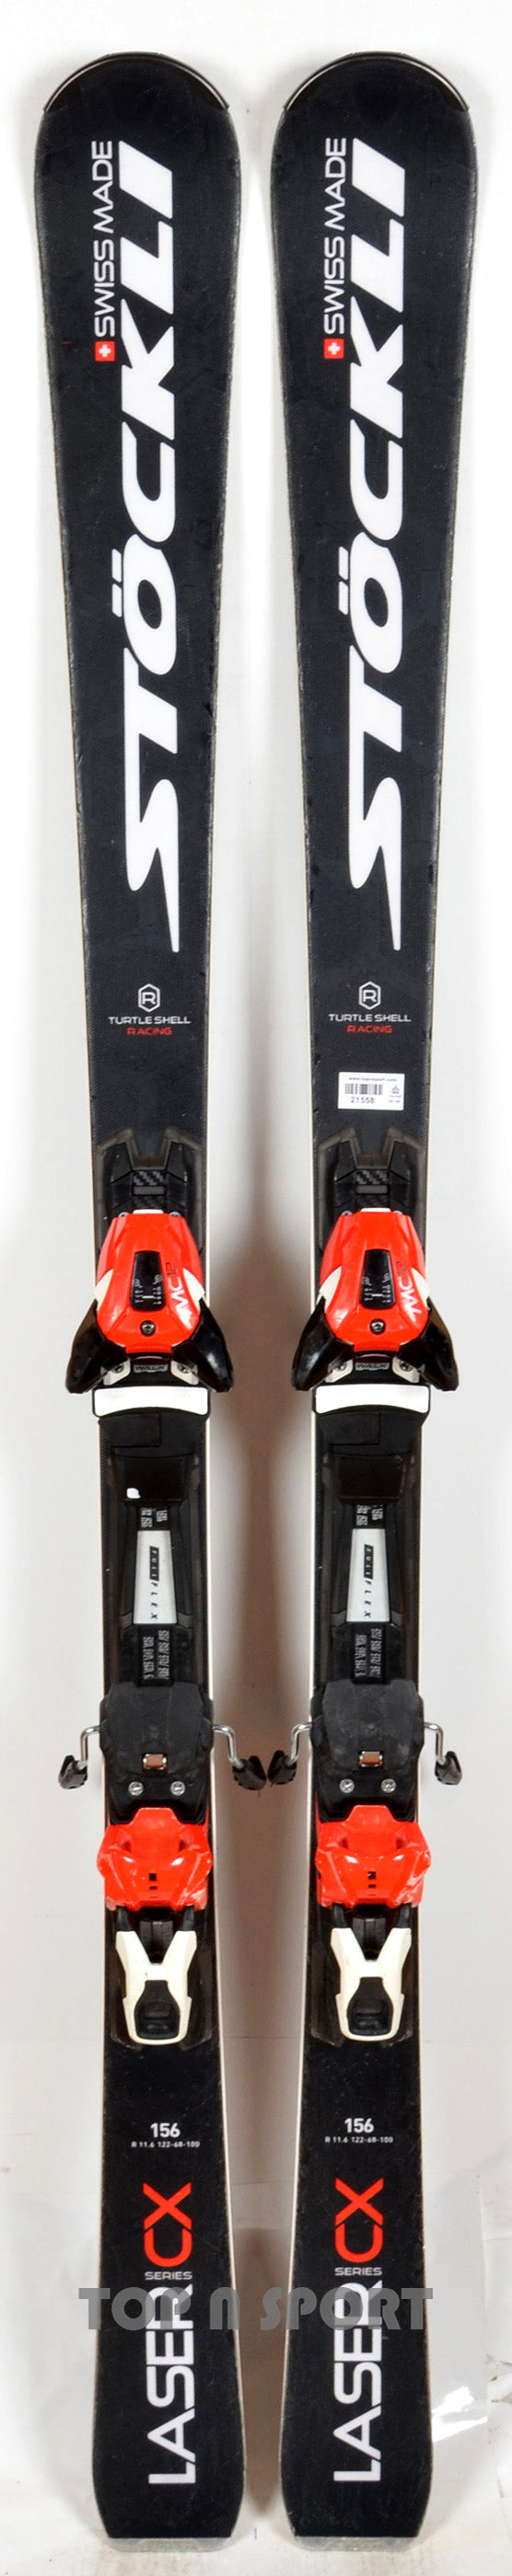 Stöckli LASER CX - skis d'occasion